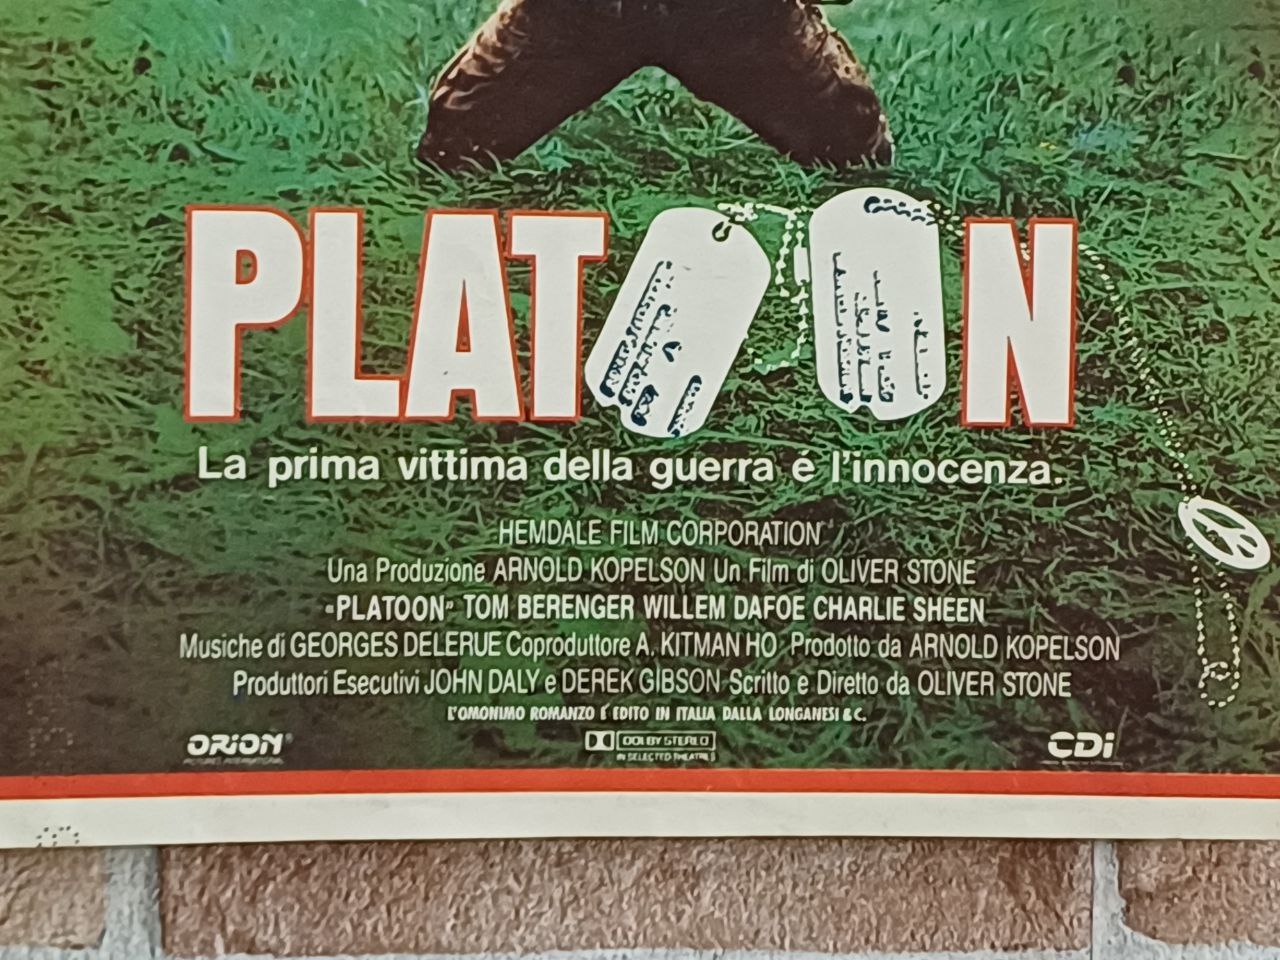 Locandina originale di cinema - "Platoon"